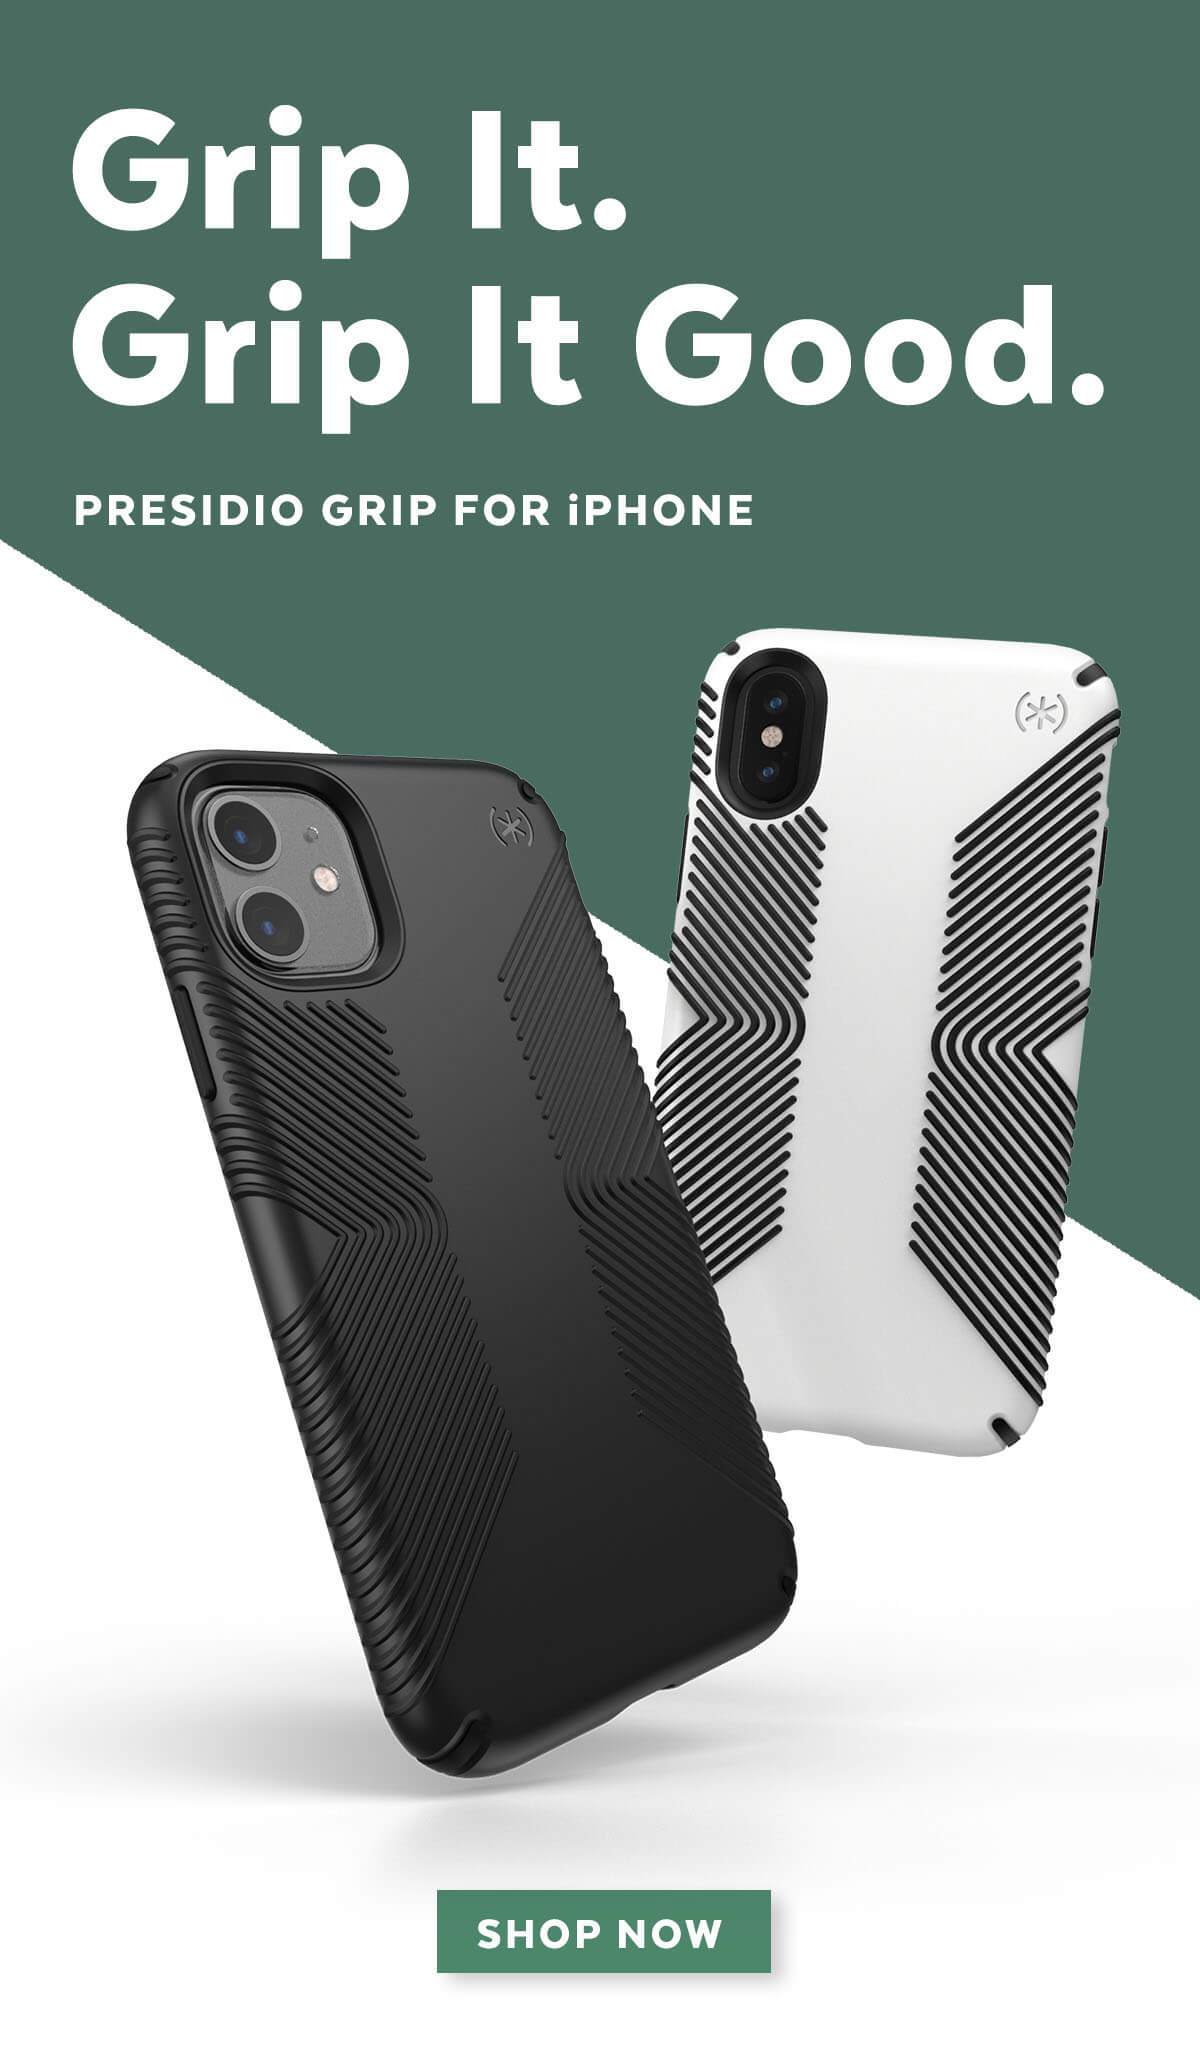 Grip it.Grip it good. Presidio grip for iPhone. Shop now.